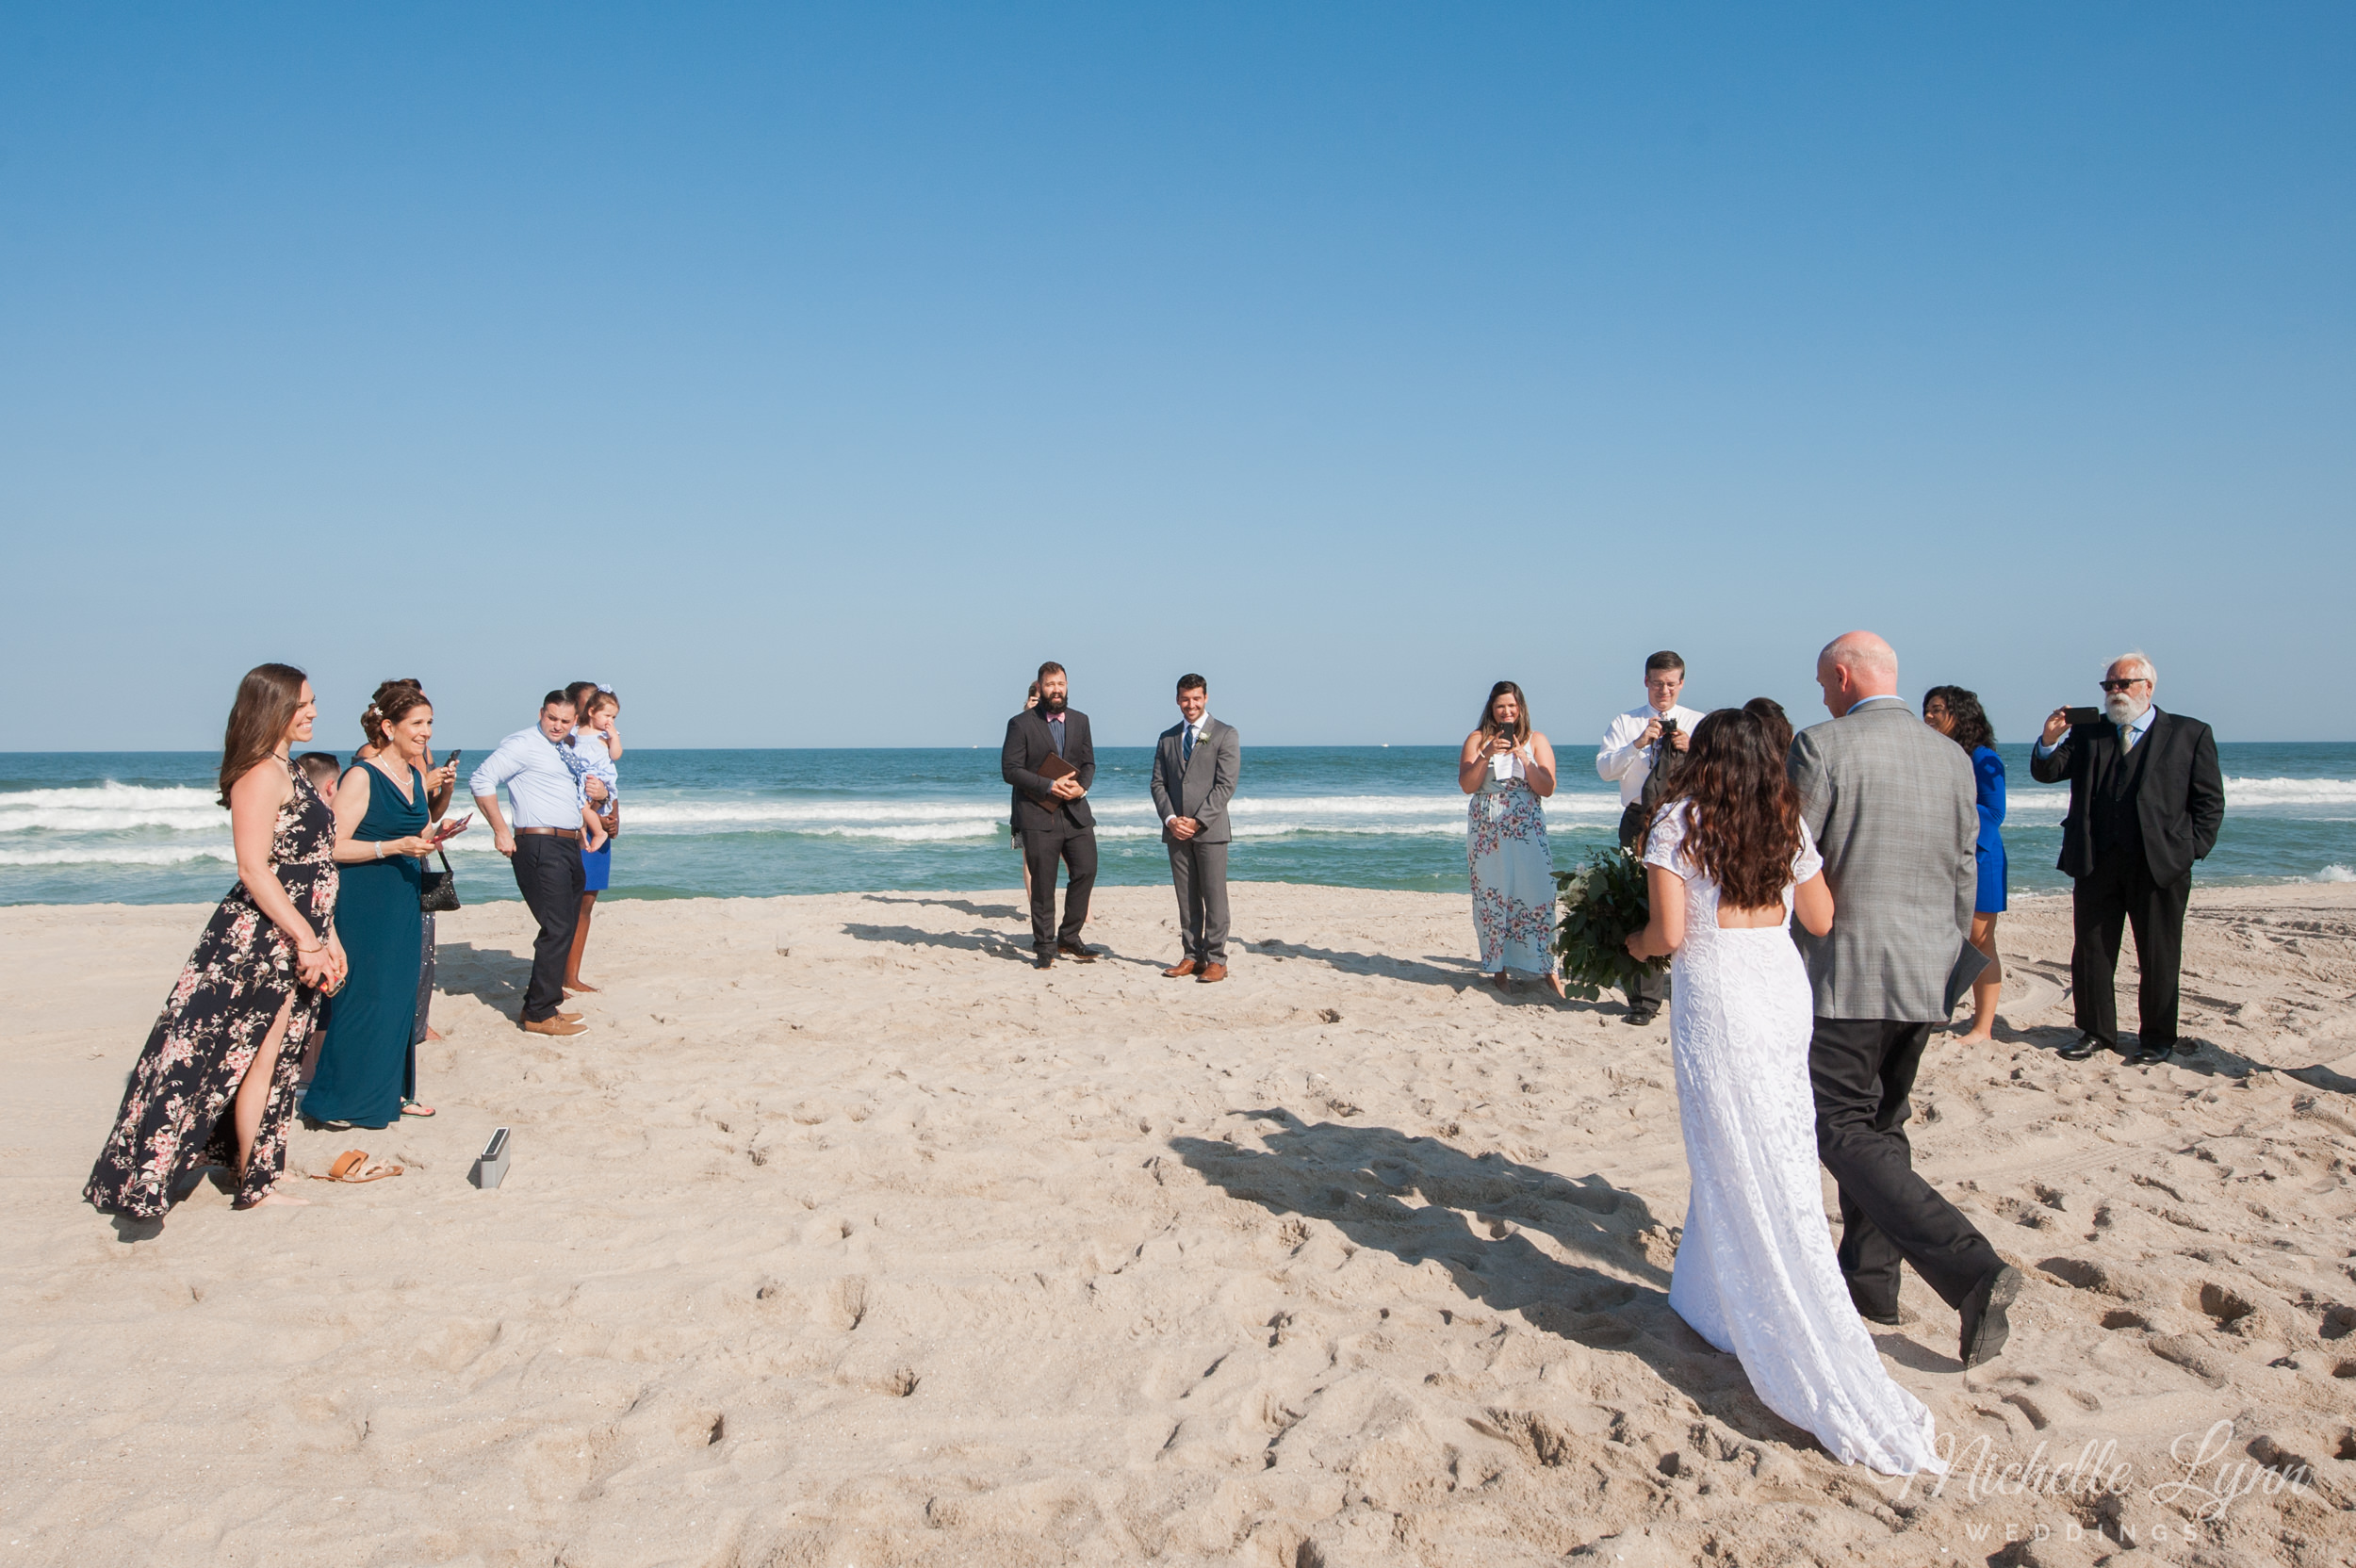 mlw-brant-beach-lbi-wedding-photography-13.jpg